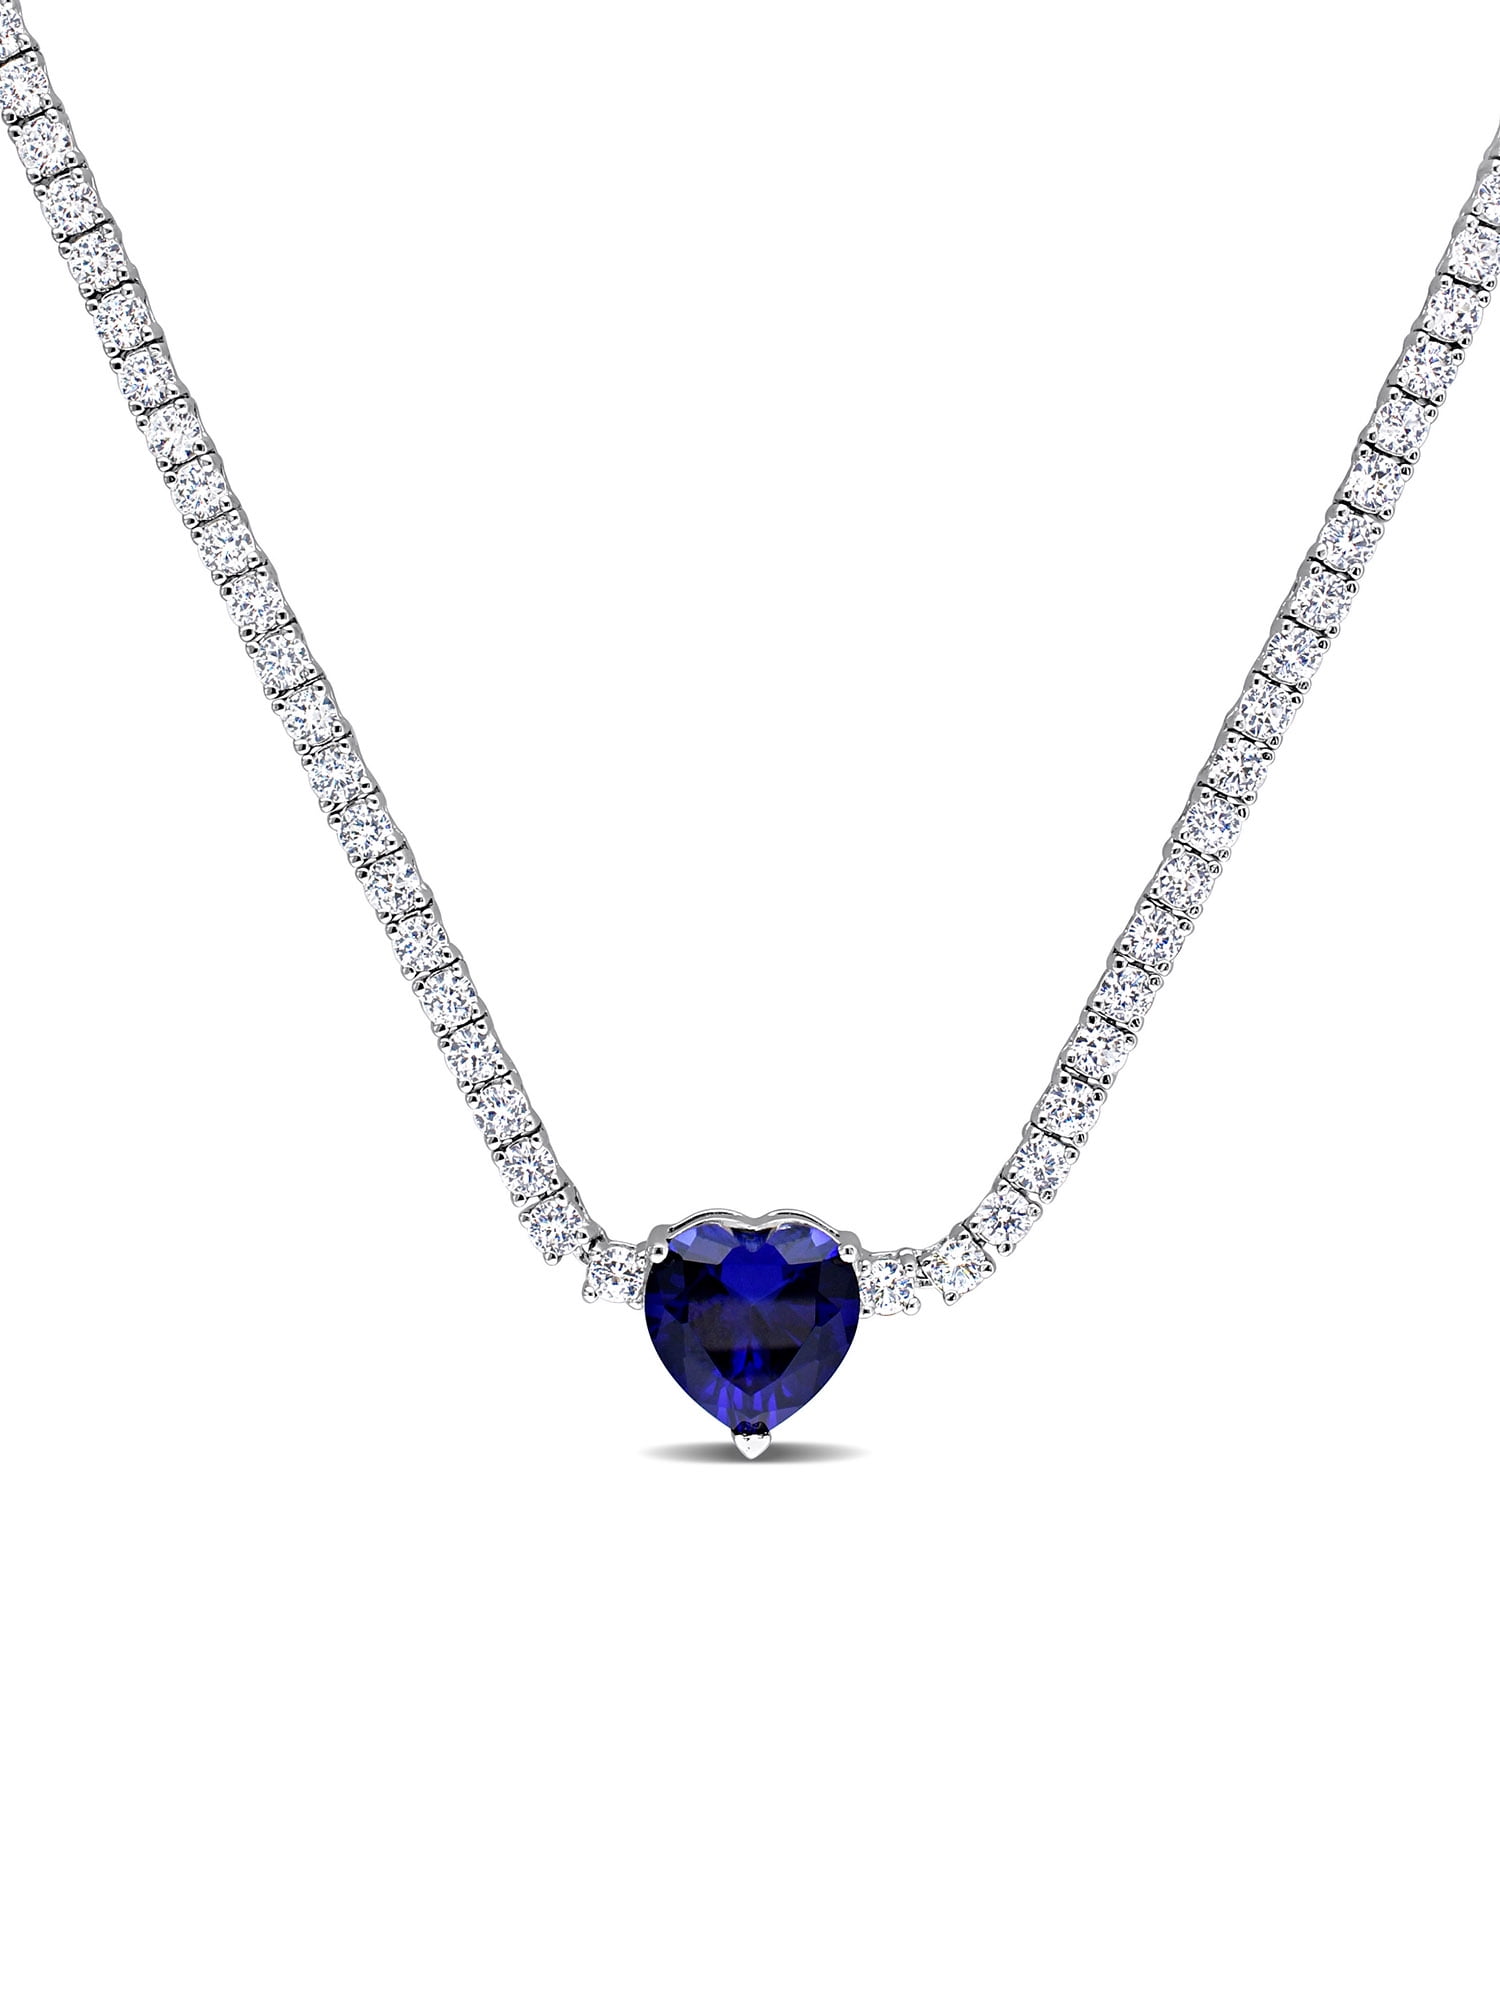 September Birthstone Sapphire Necklace | Dogeared